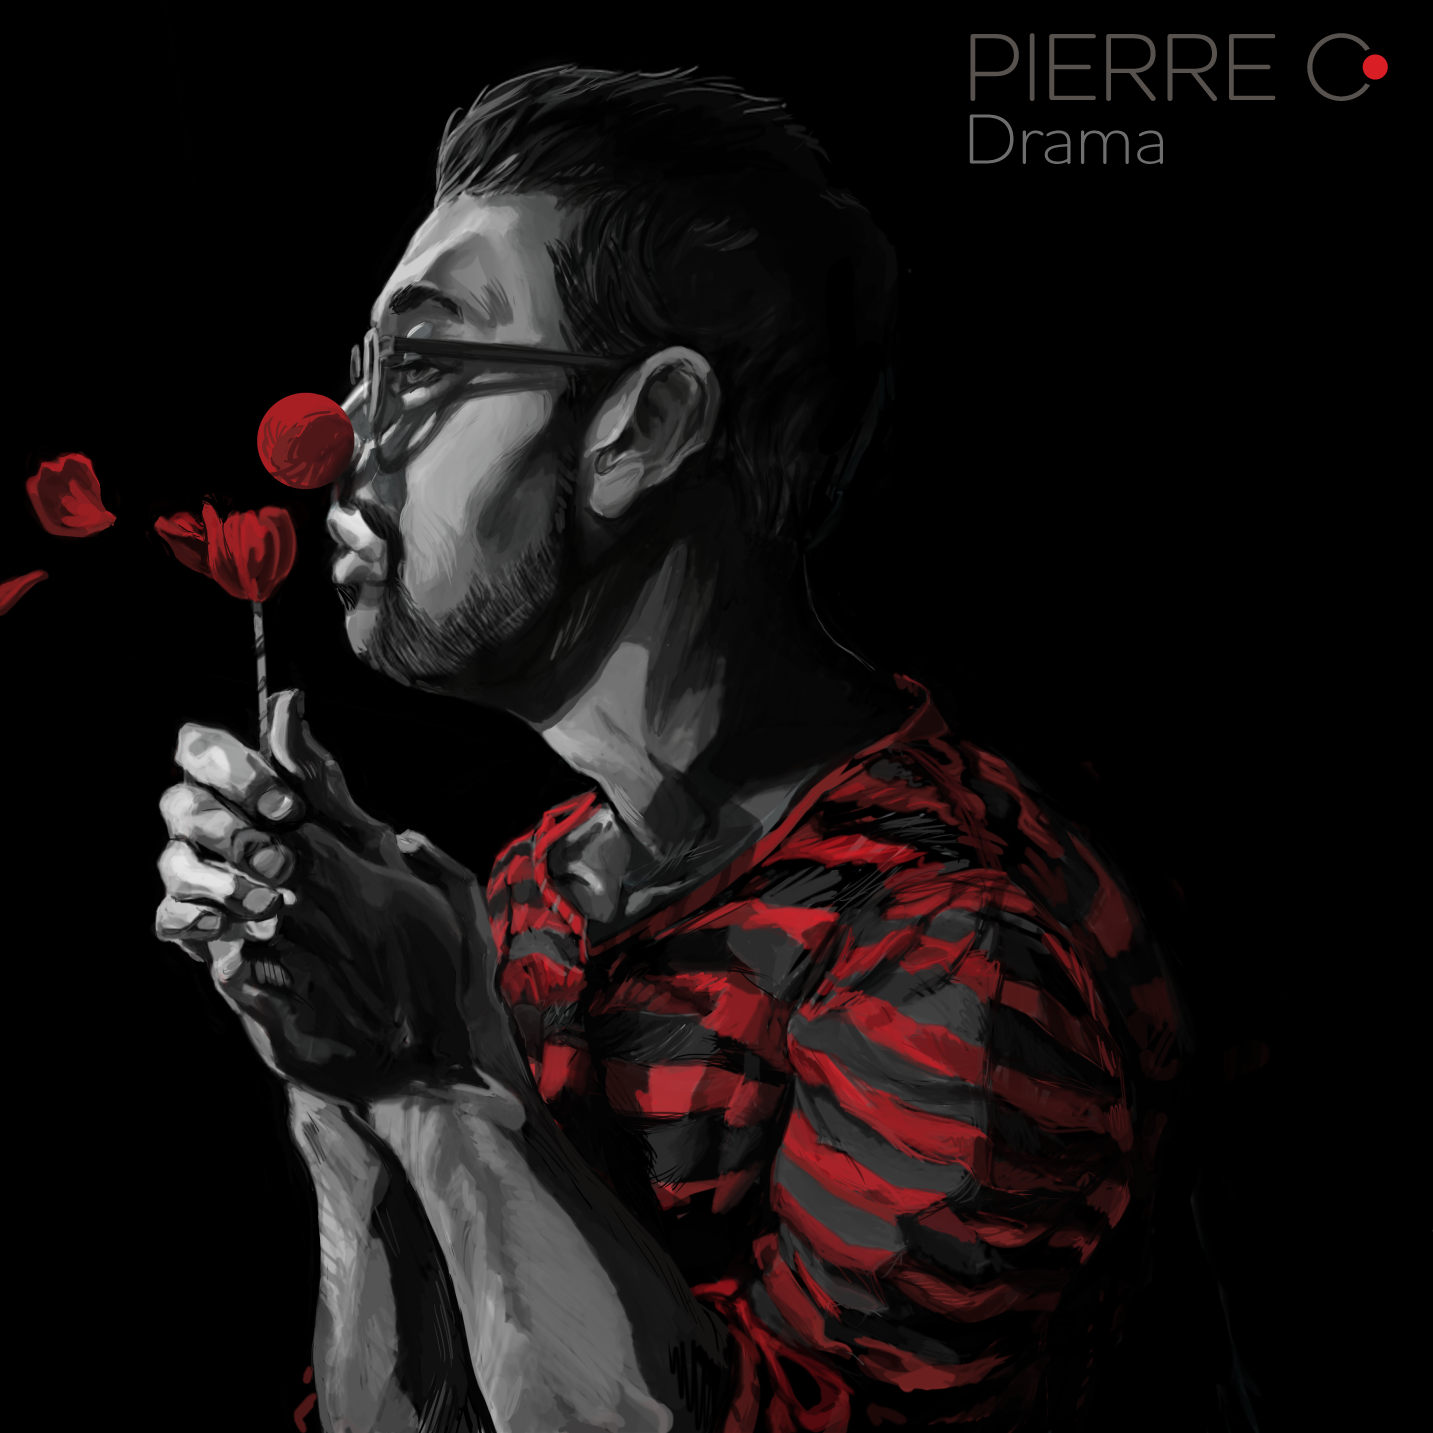 EP "Drama" de Pierre O